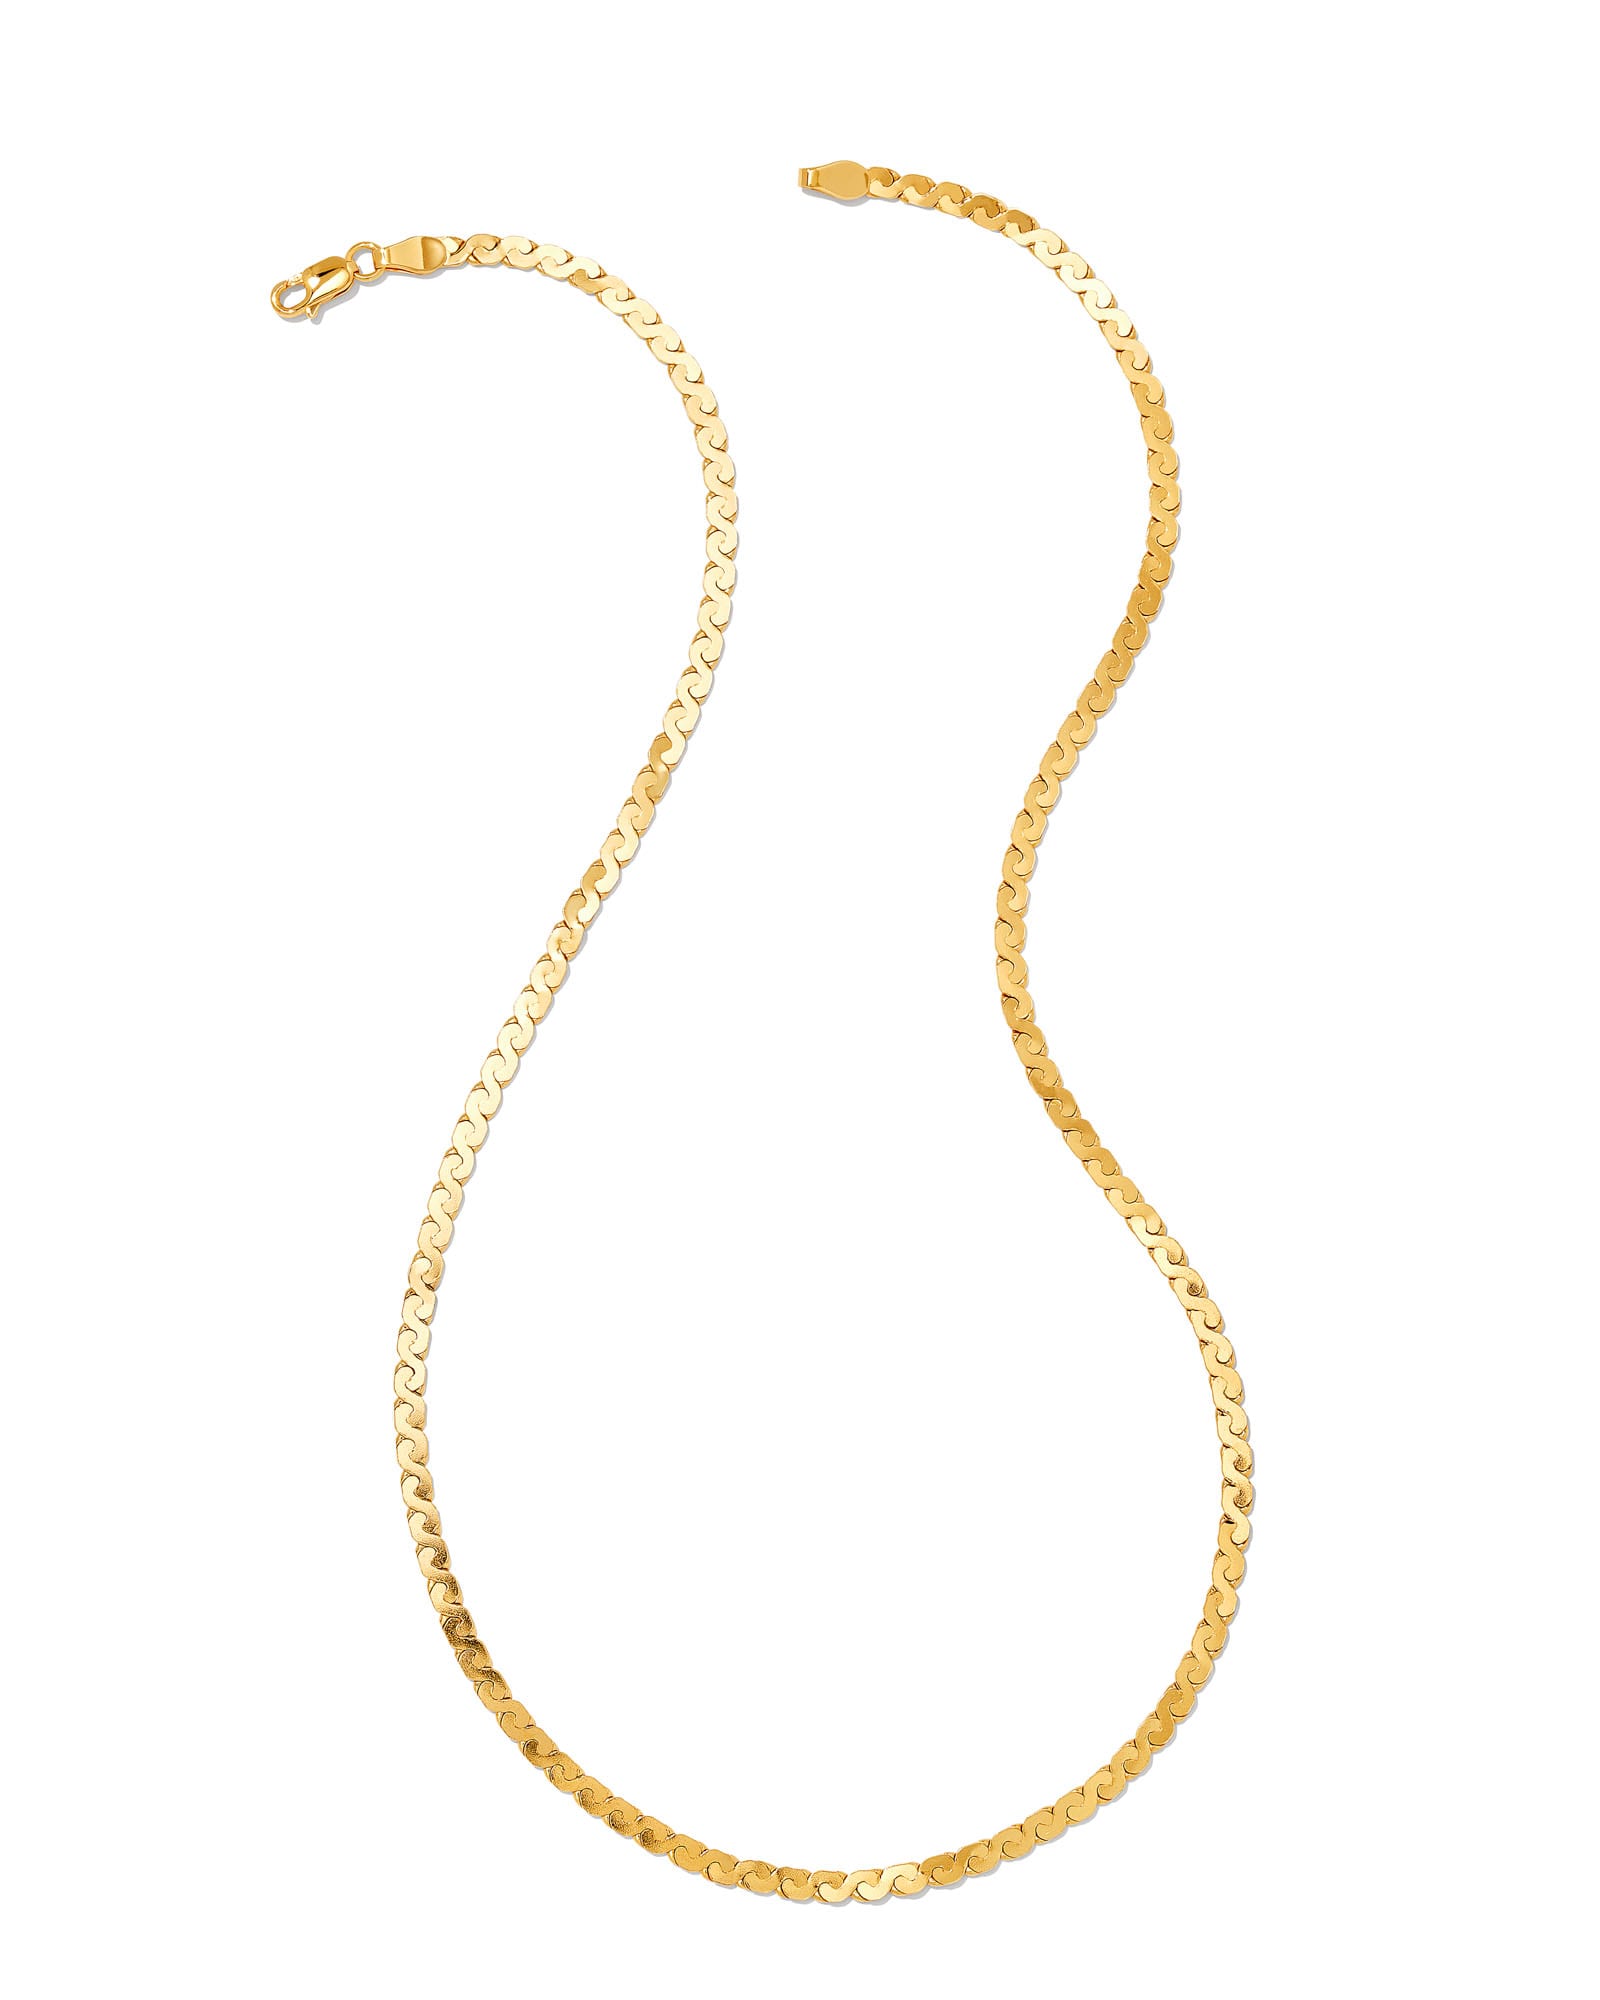 Large Serpentine Chain Necklace in 18k Gold Vermeil